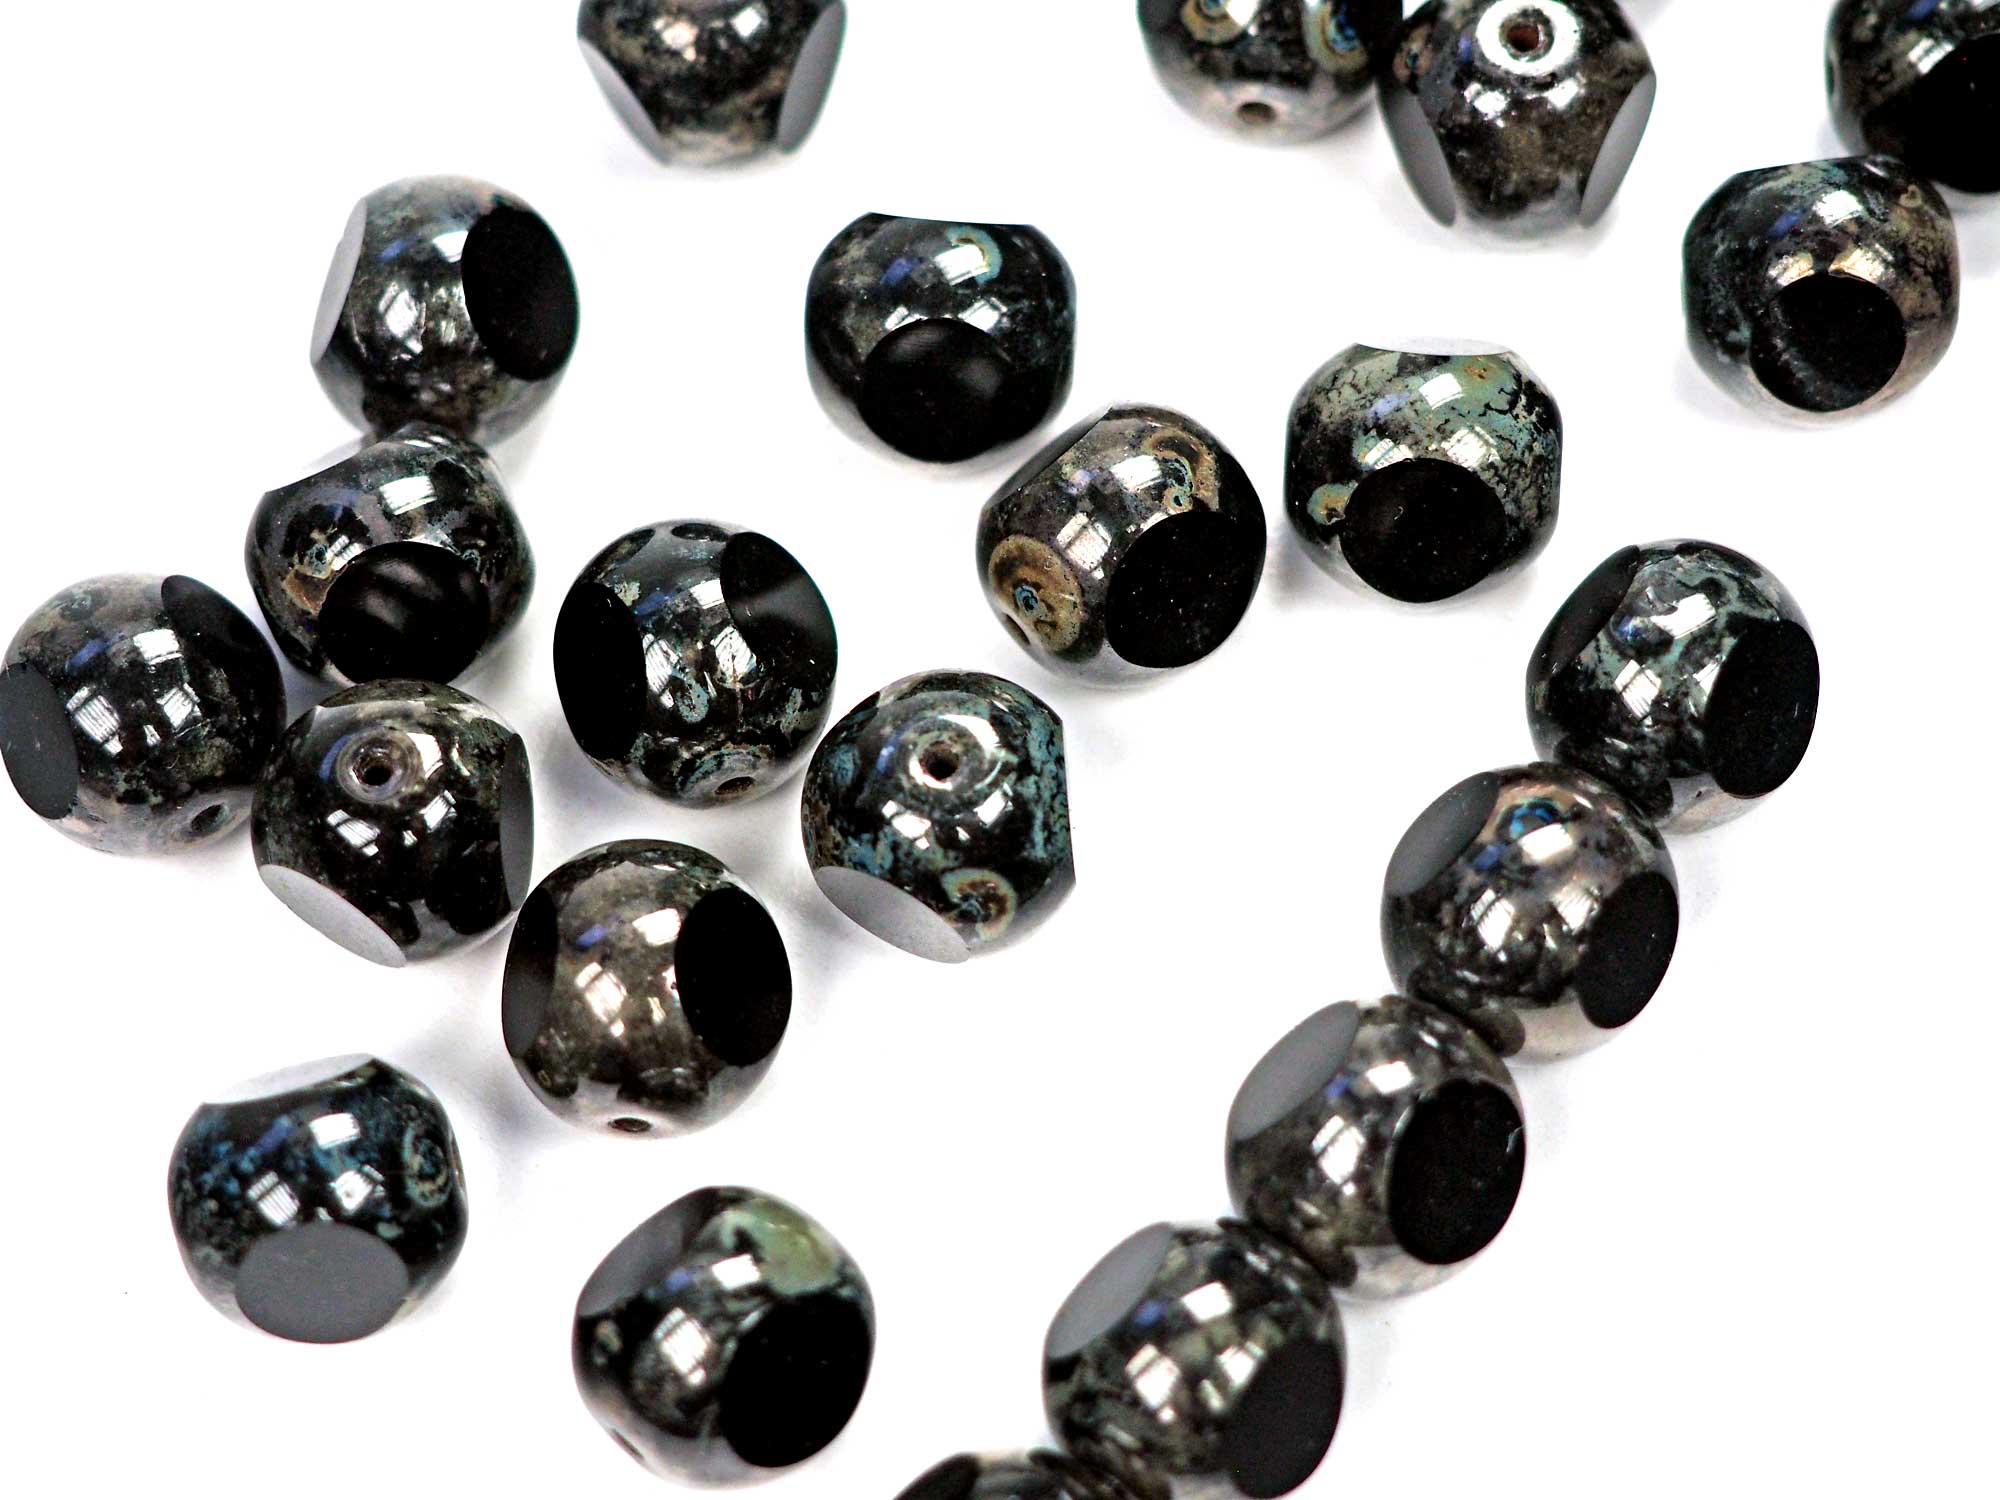 Czech Glass Leaf Beads - Black Leaf Beads - Peacock Beads - 13x10mm - Leaf  Beads